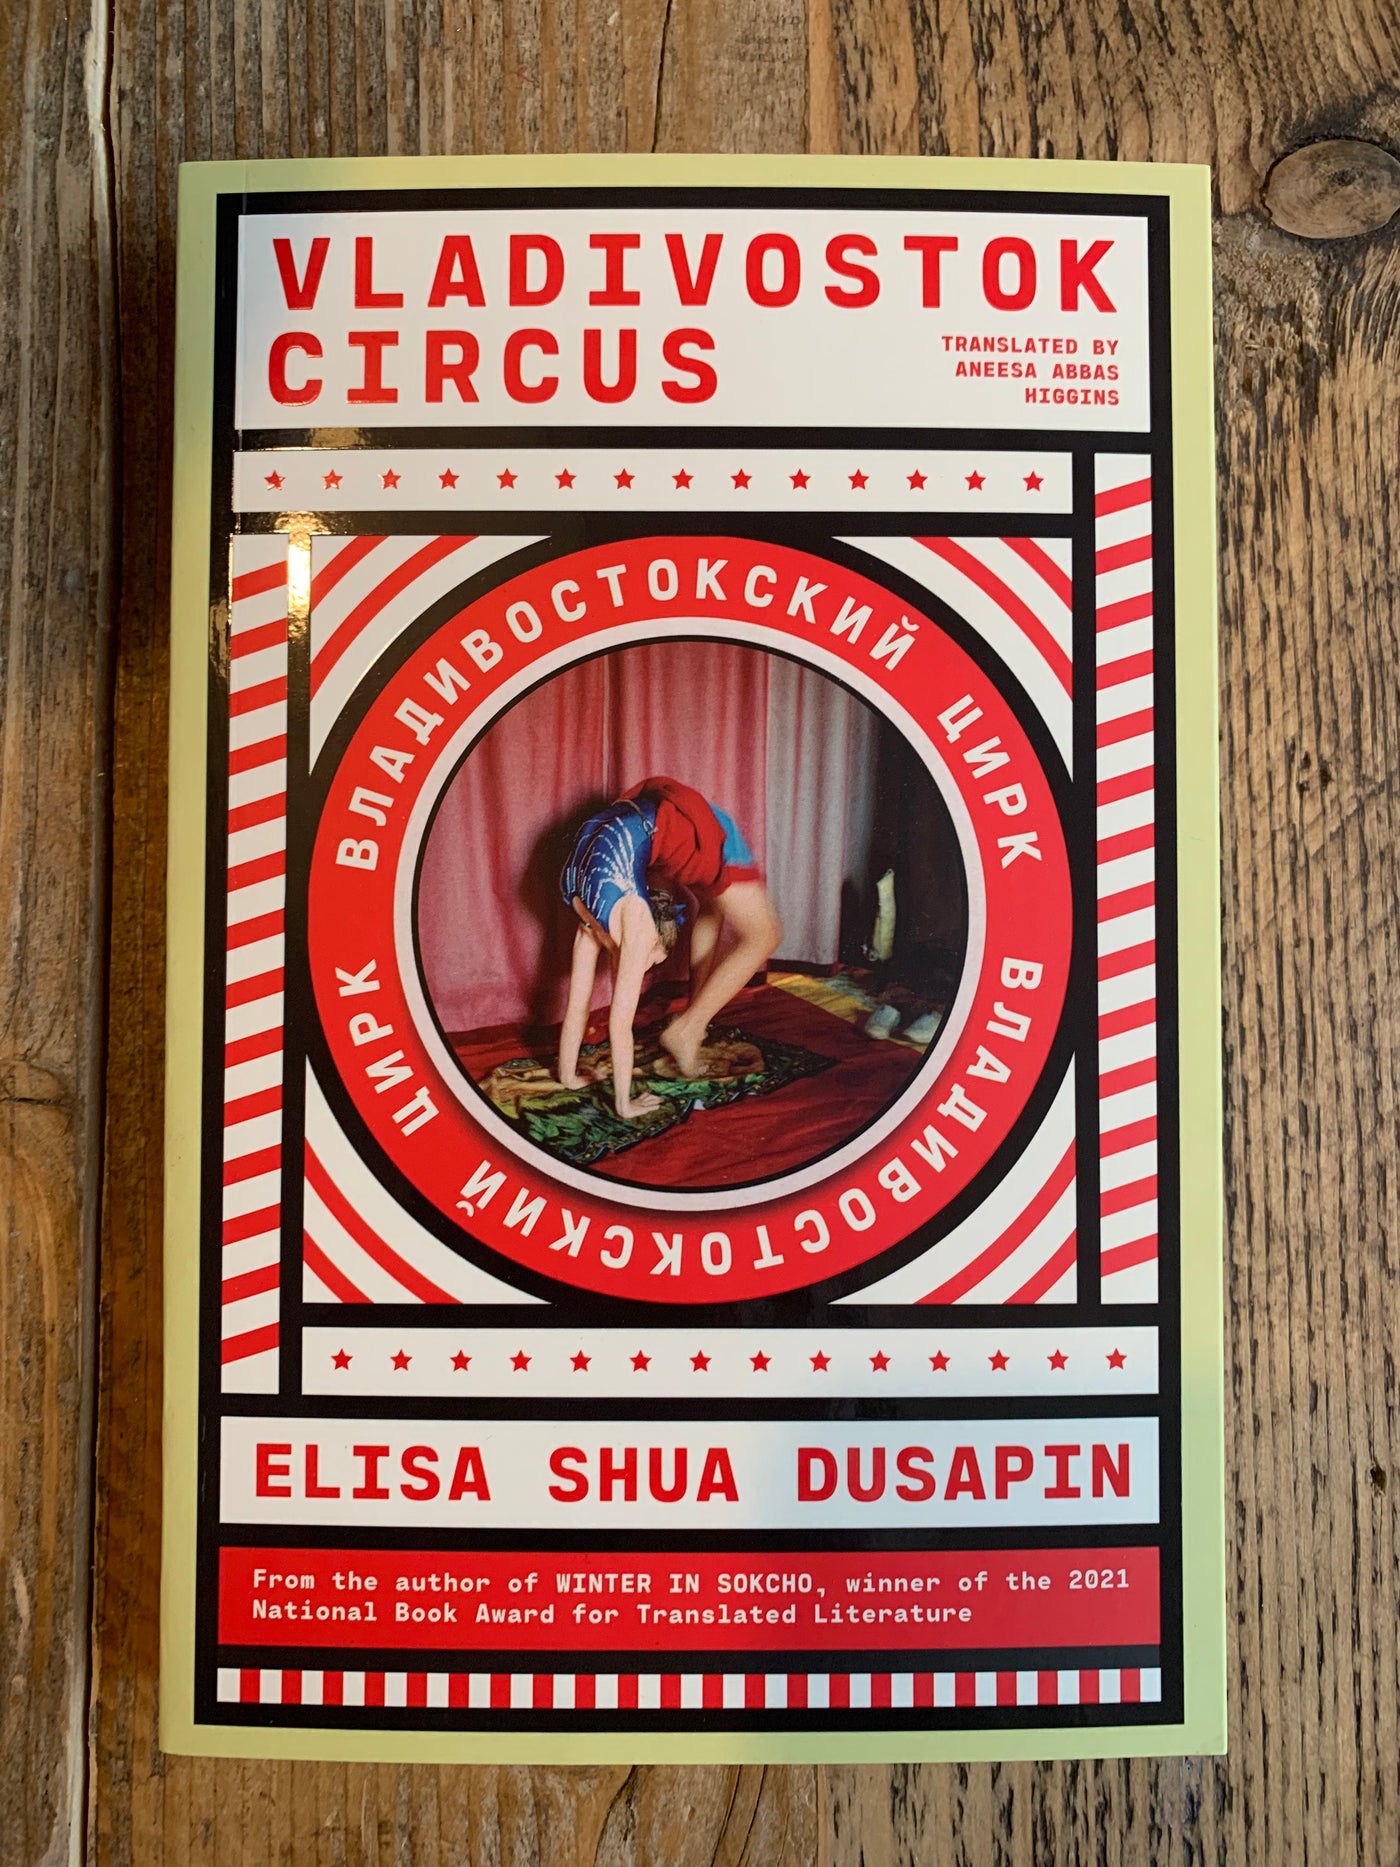 Vladivostok Circus